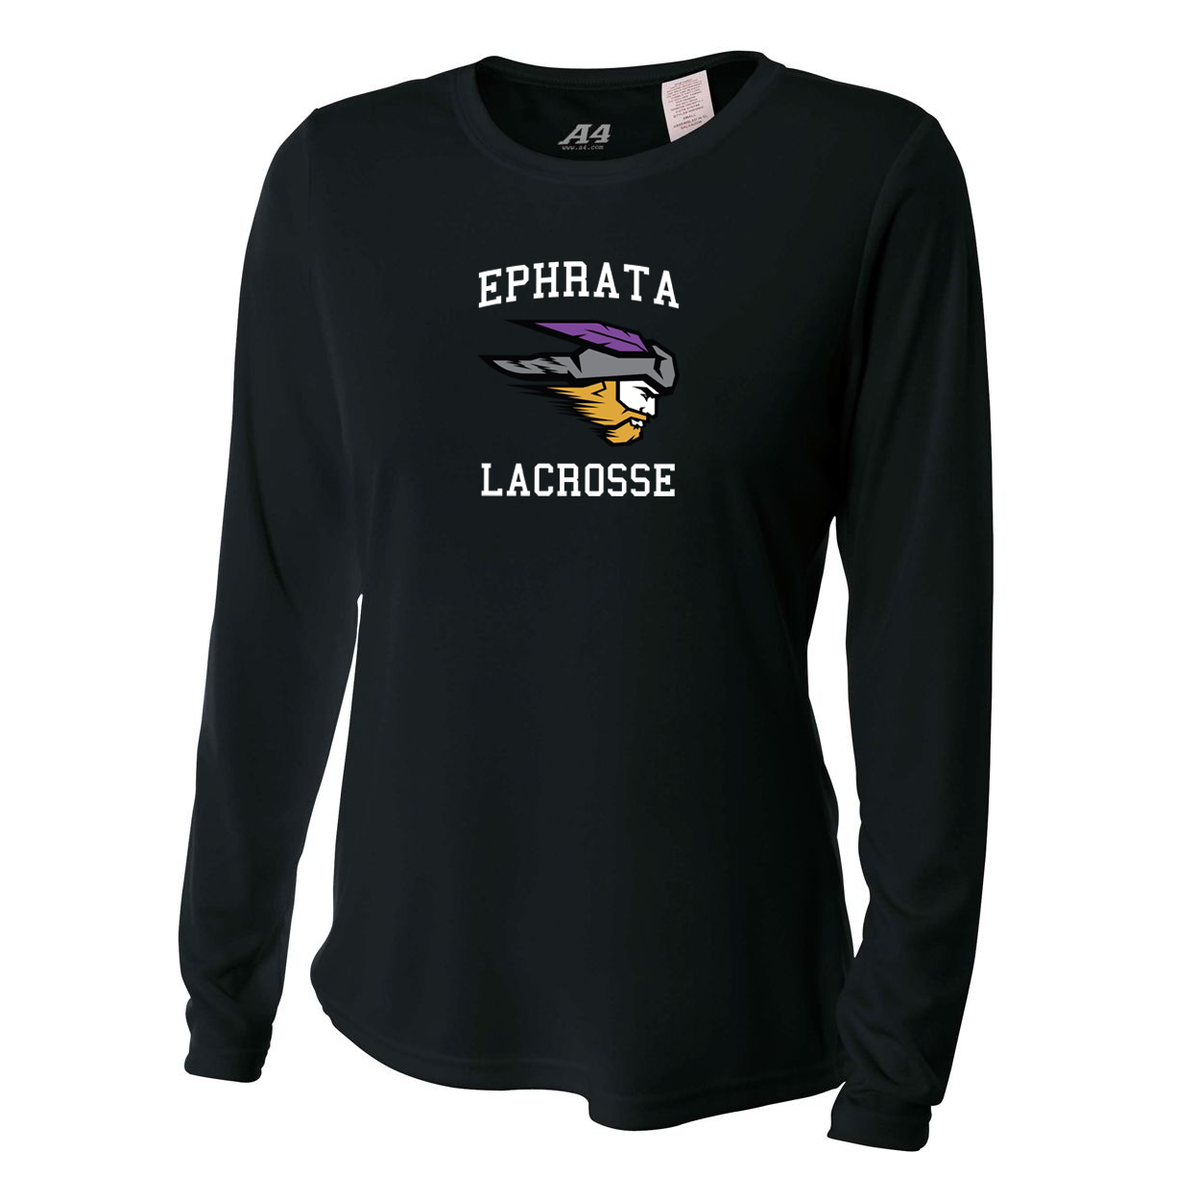 Ephrata Lacrosse A4 Women's Long Sleeve Performance Crew